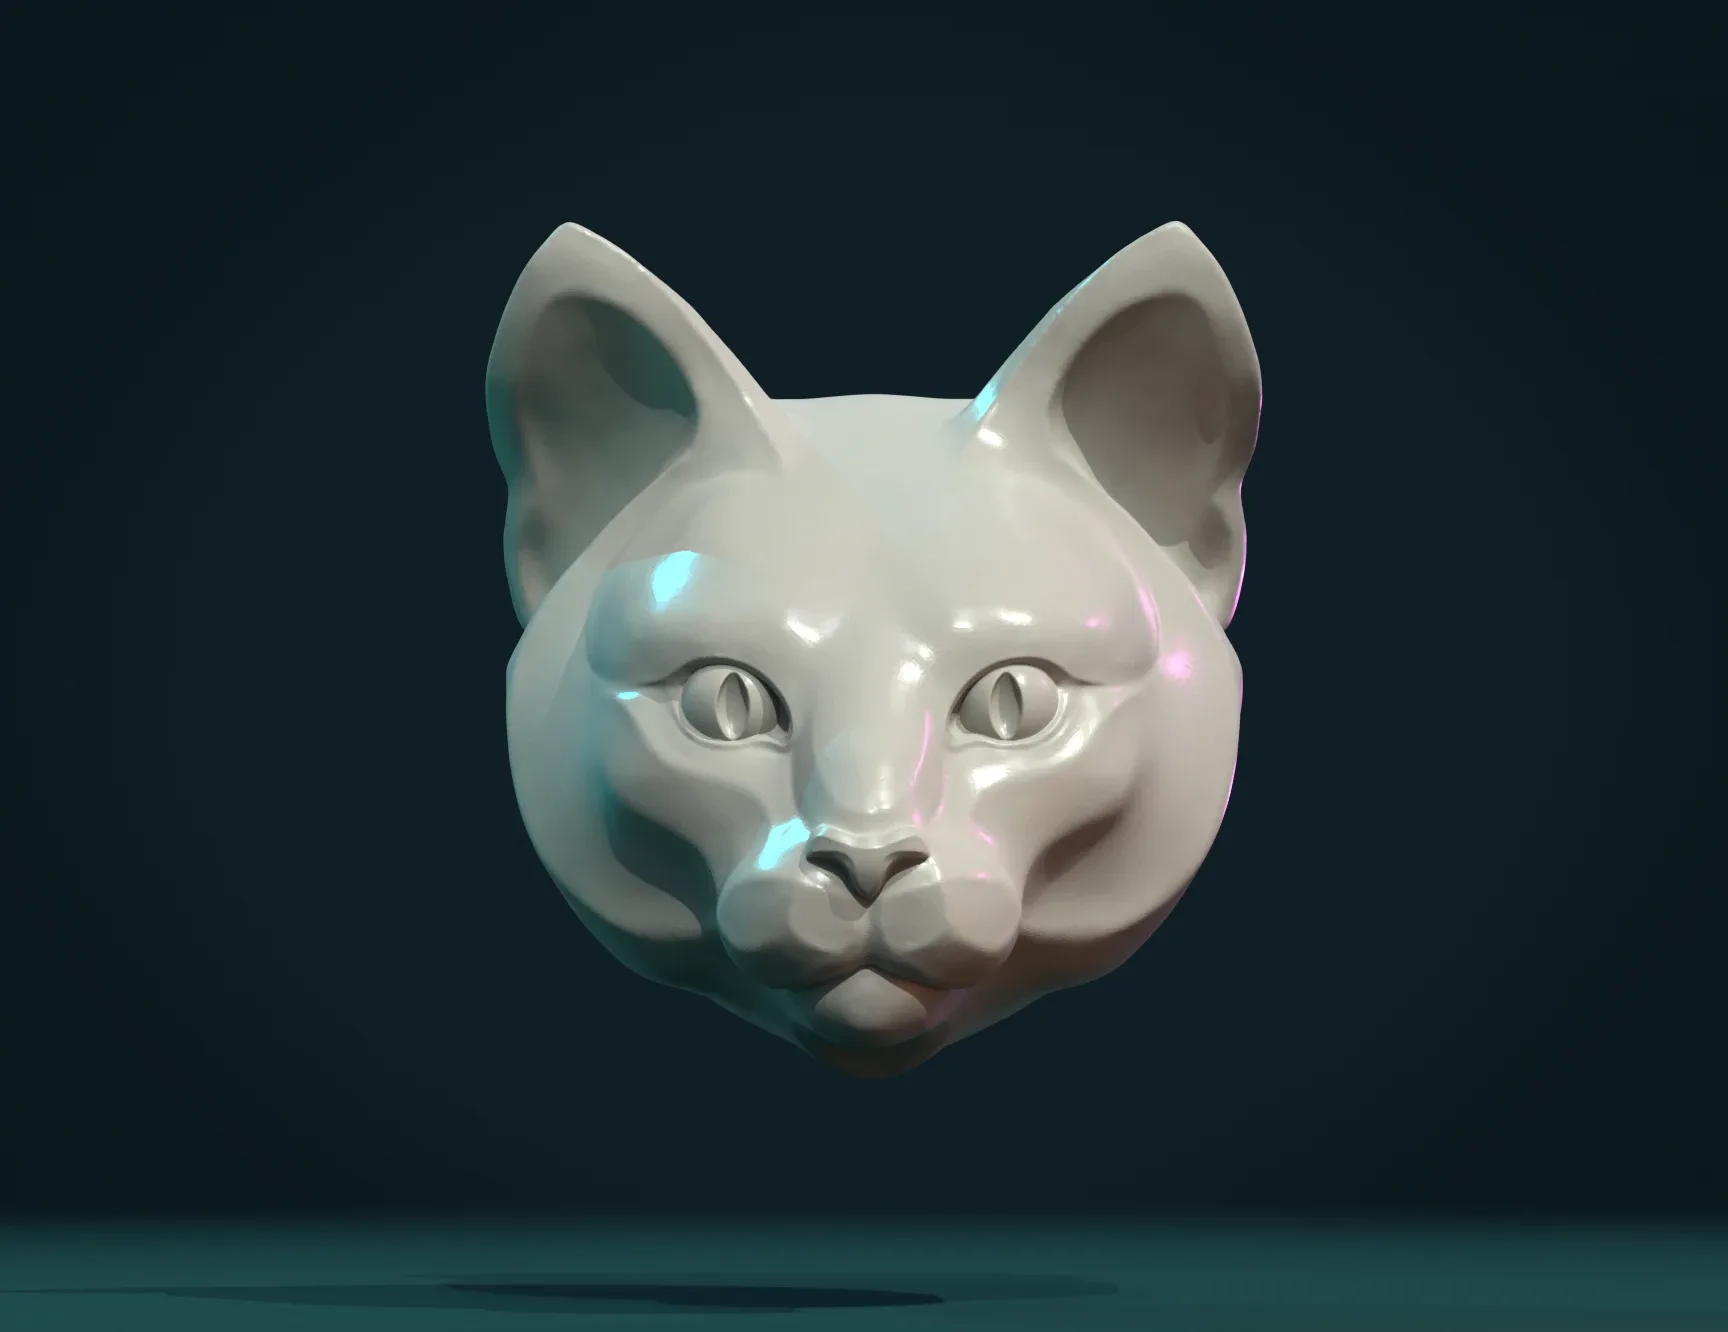 Cat Head - 3D Print Ready